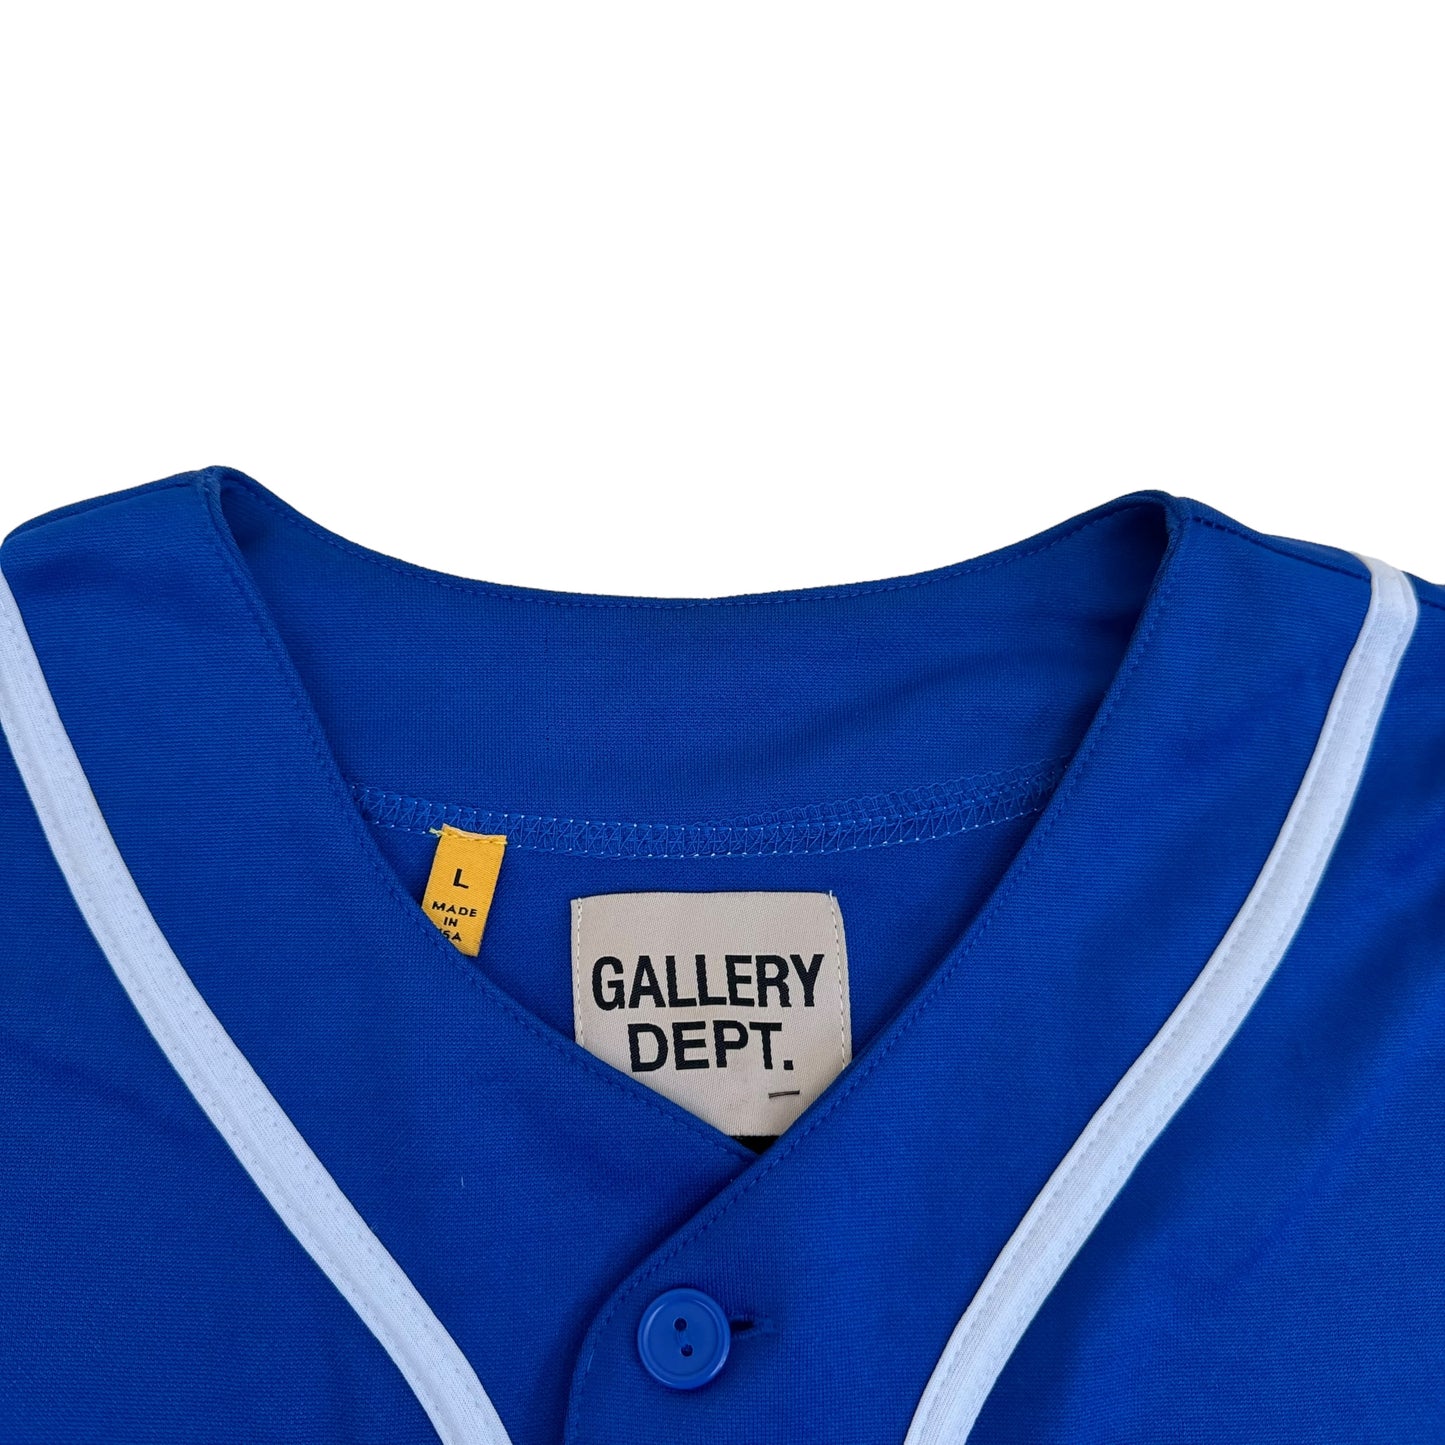 GALLERY DEPT. ECHO PARK BASEBALL JERSEY BLUE L